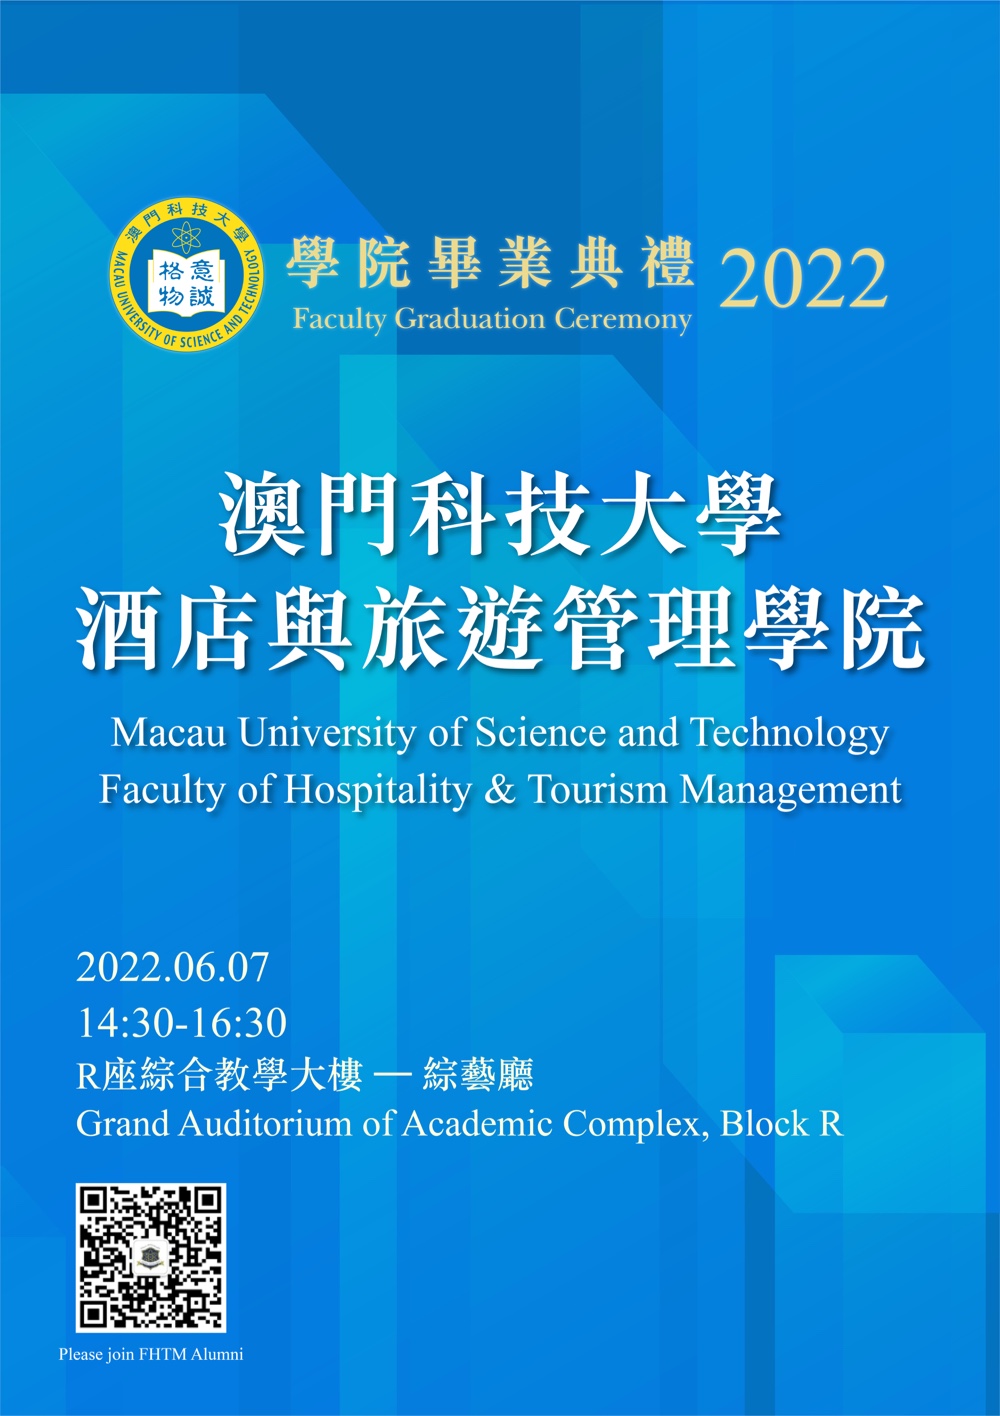 FHTM graduation ceremony 2022